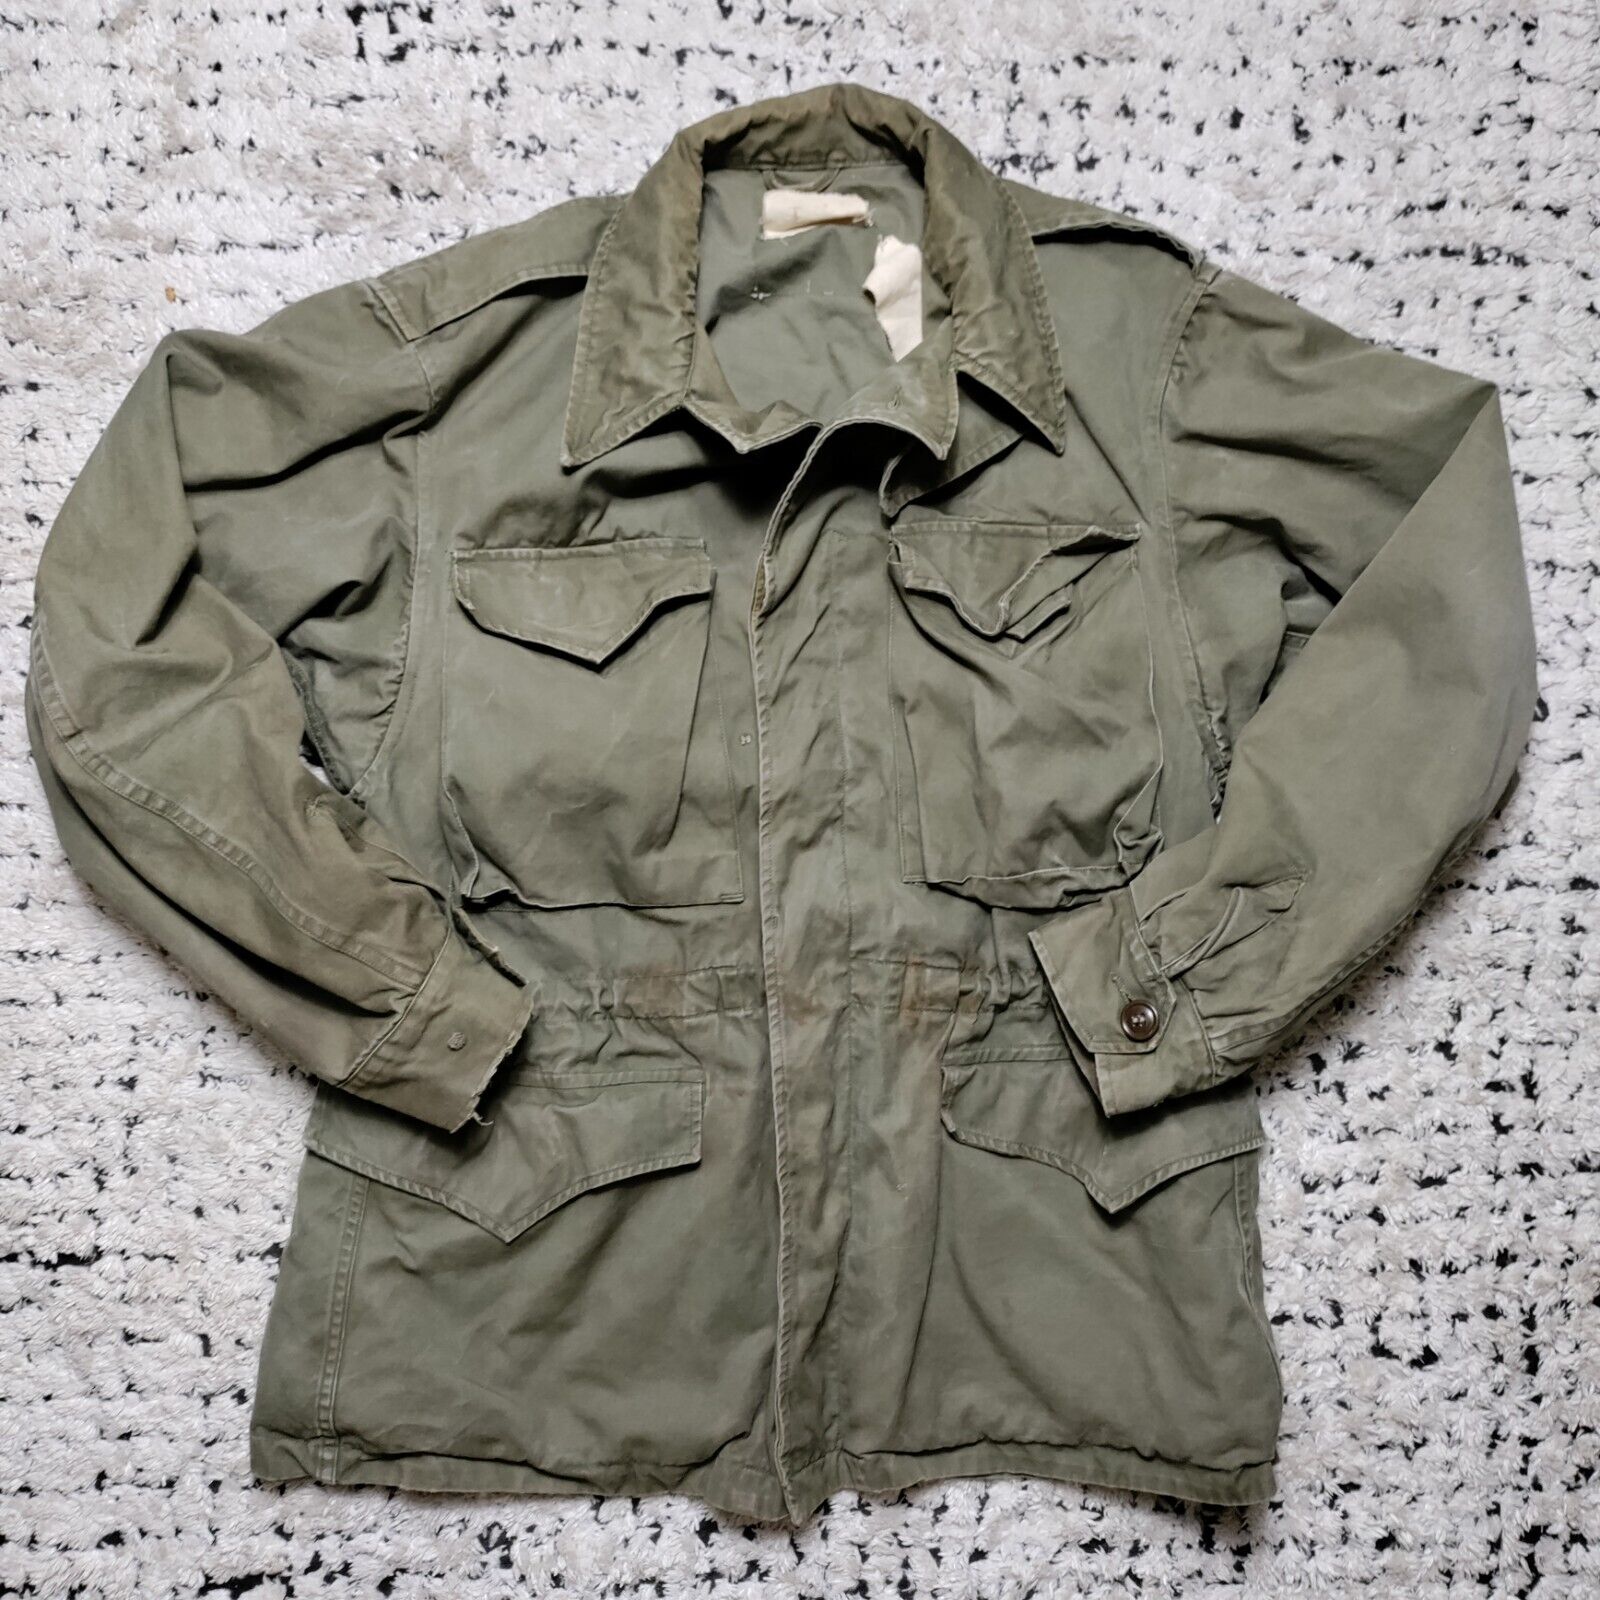 Vintage US Military Jacket Small Green M-1950 Field Jacket Unlined Korean War